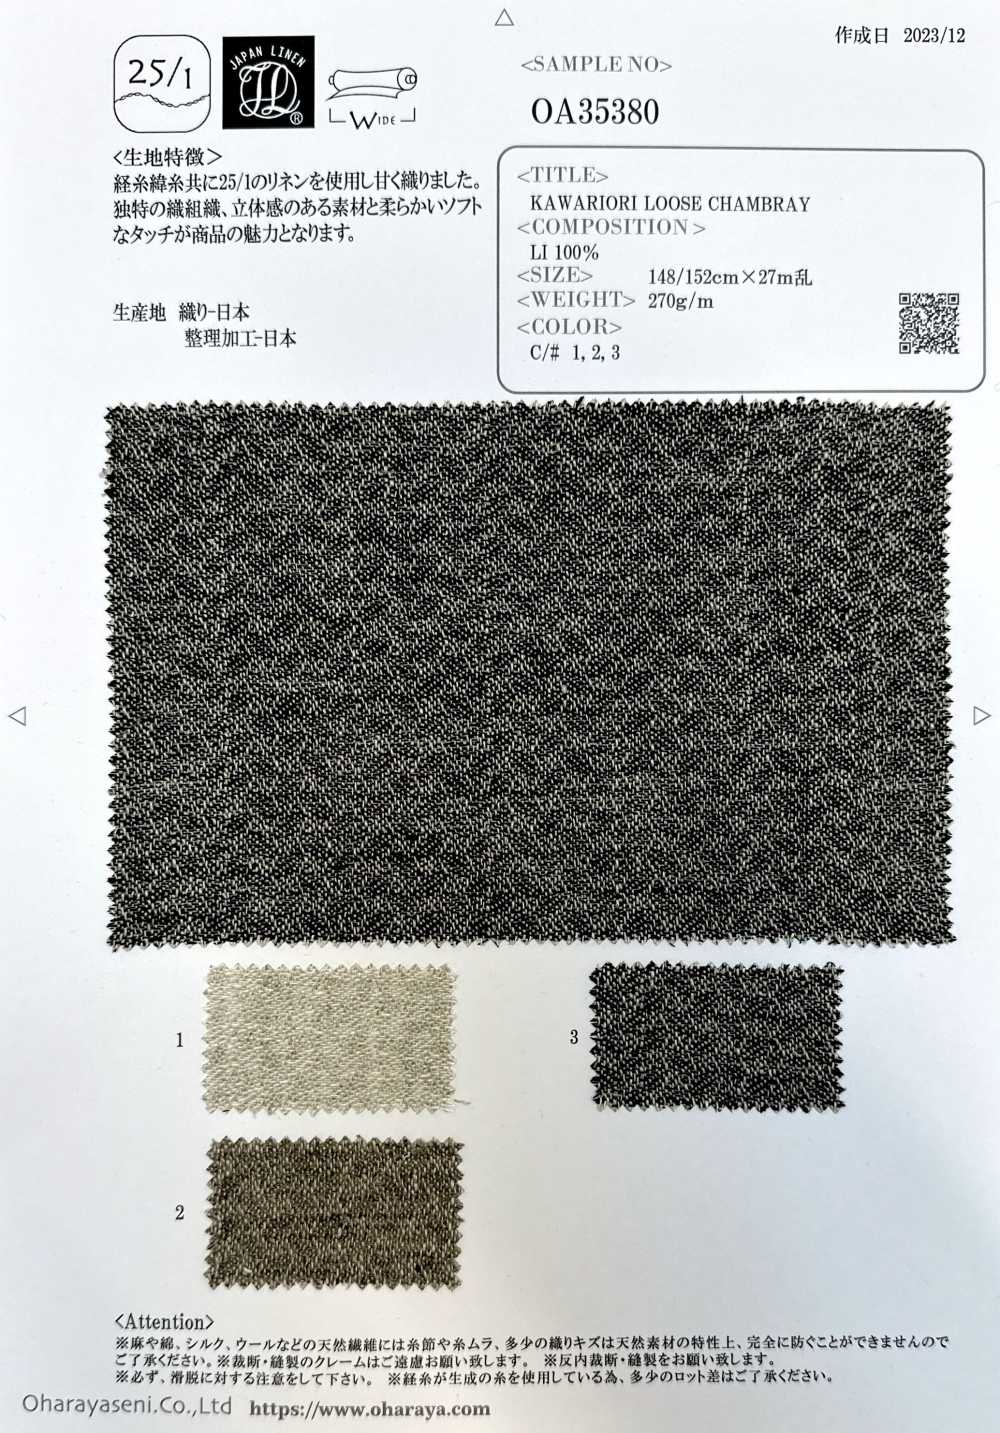 OA35380 KAWARIORI LOSE CHAMBRAY[Textilgewebe] Oharayaseni